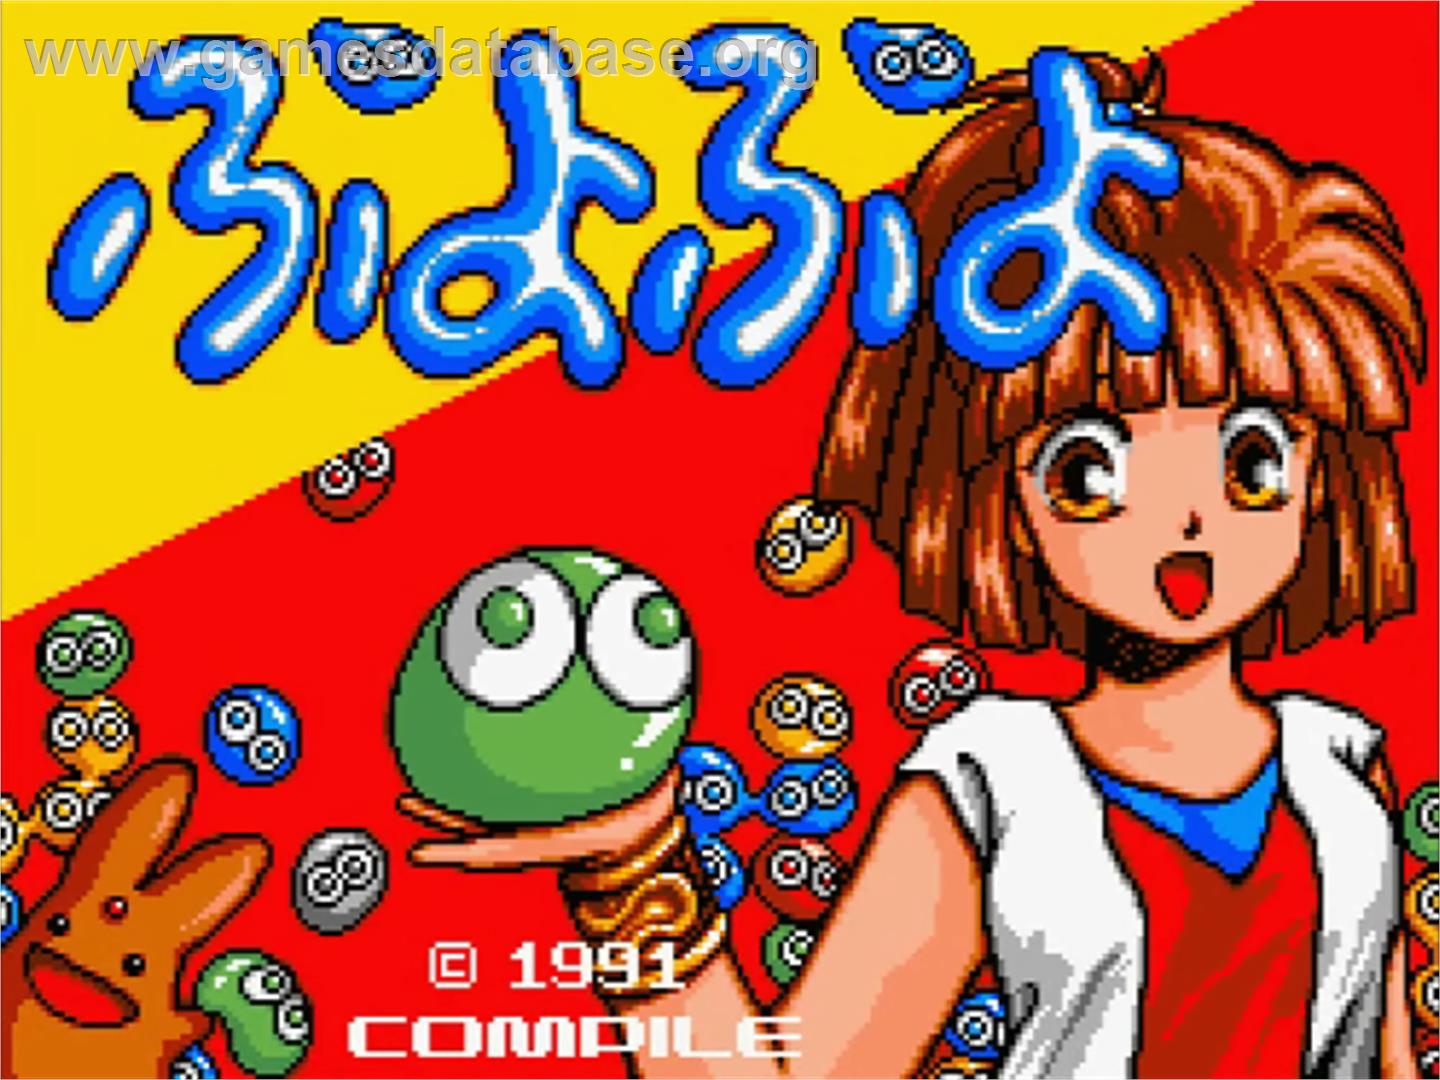 Puyo Puyo - MSX 2 - Artwork - Title Screen